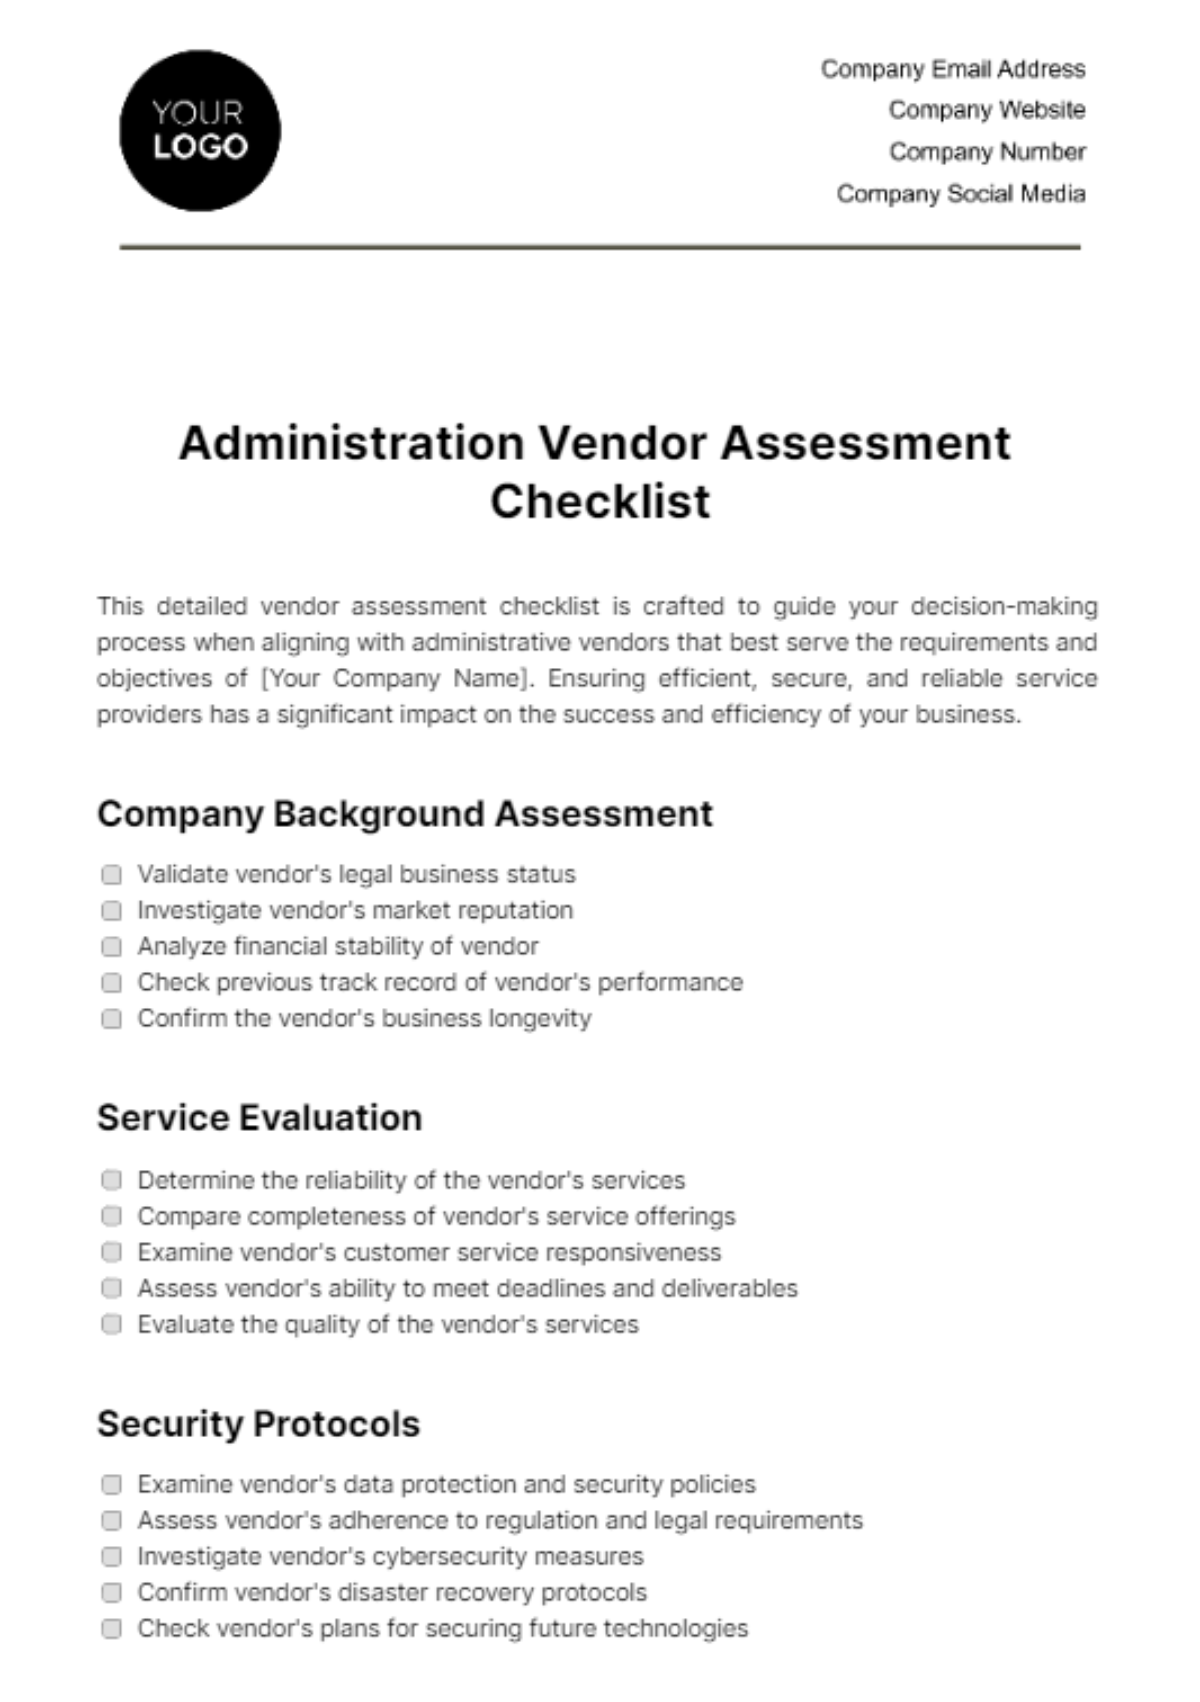 Administration Vendor Assessment Checklist Template